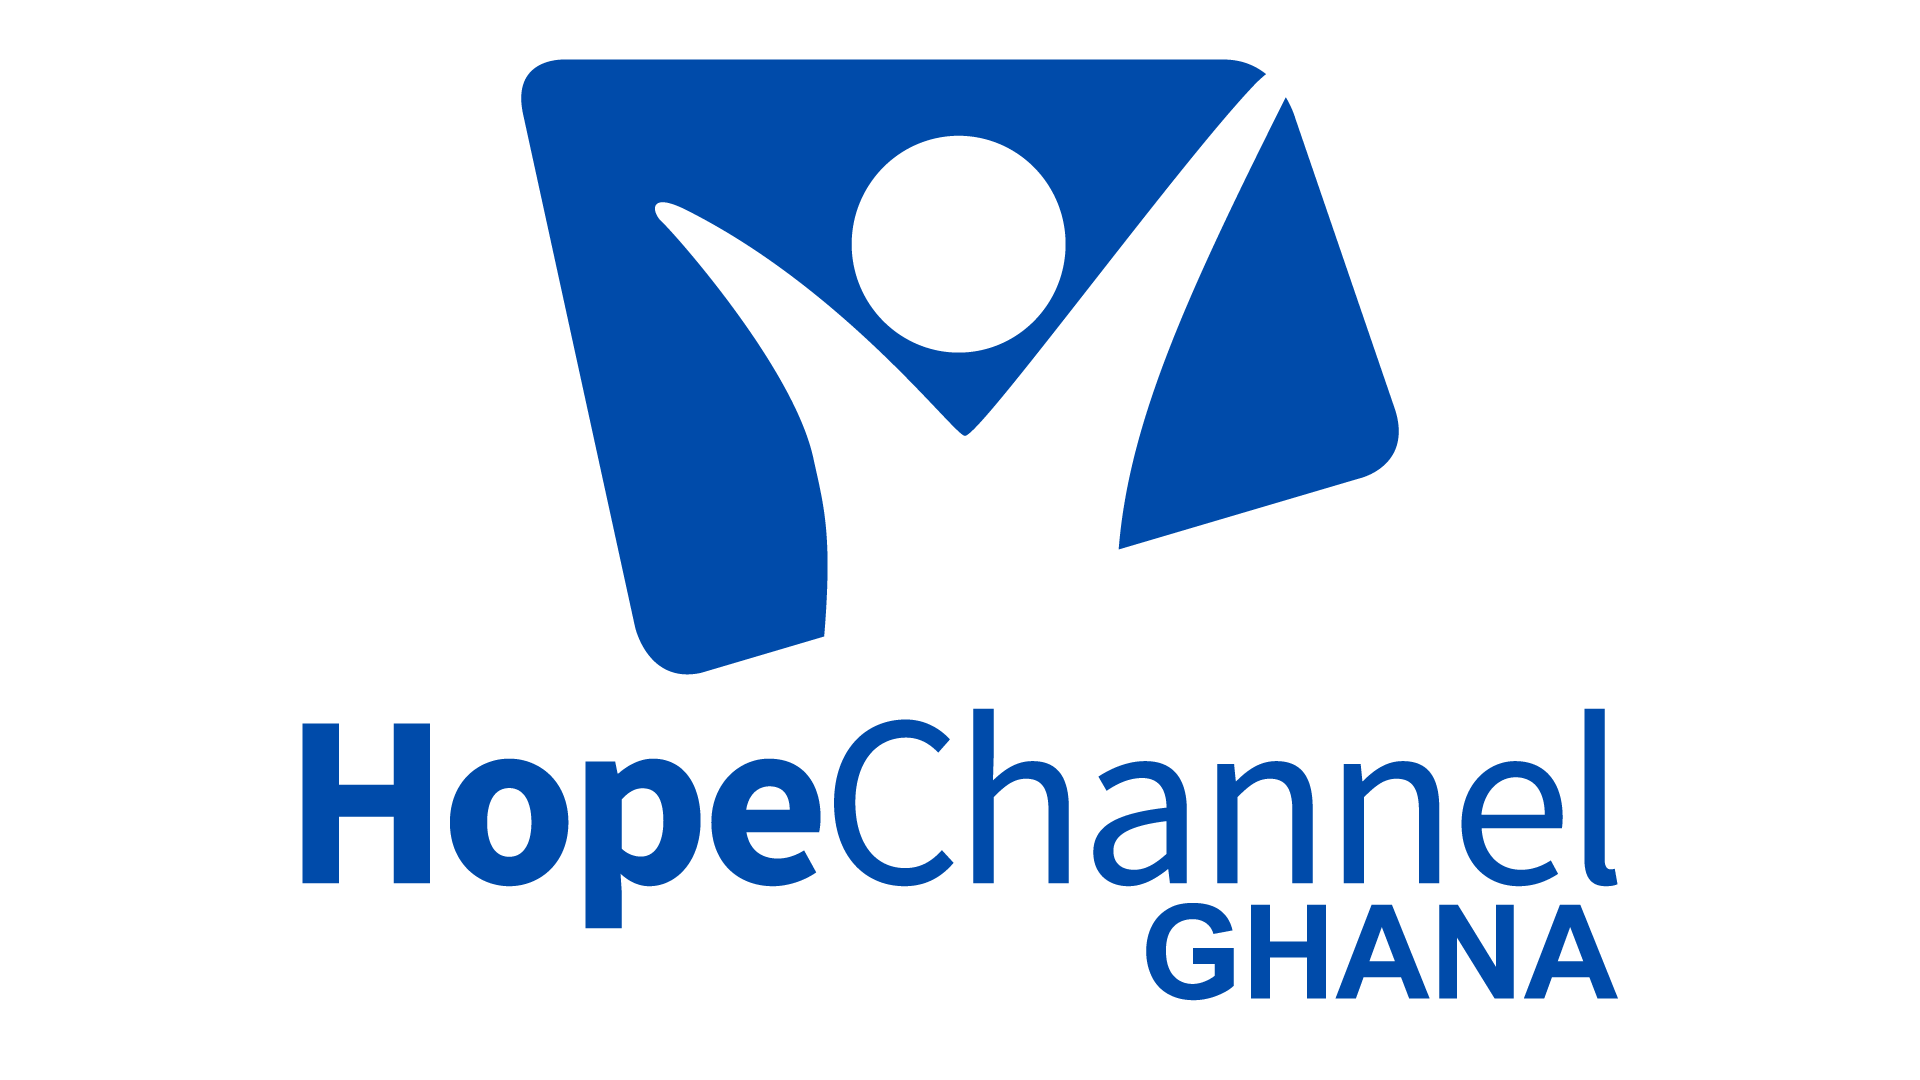 Hope Channel Ghana Live TV, Online